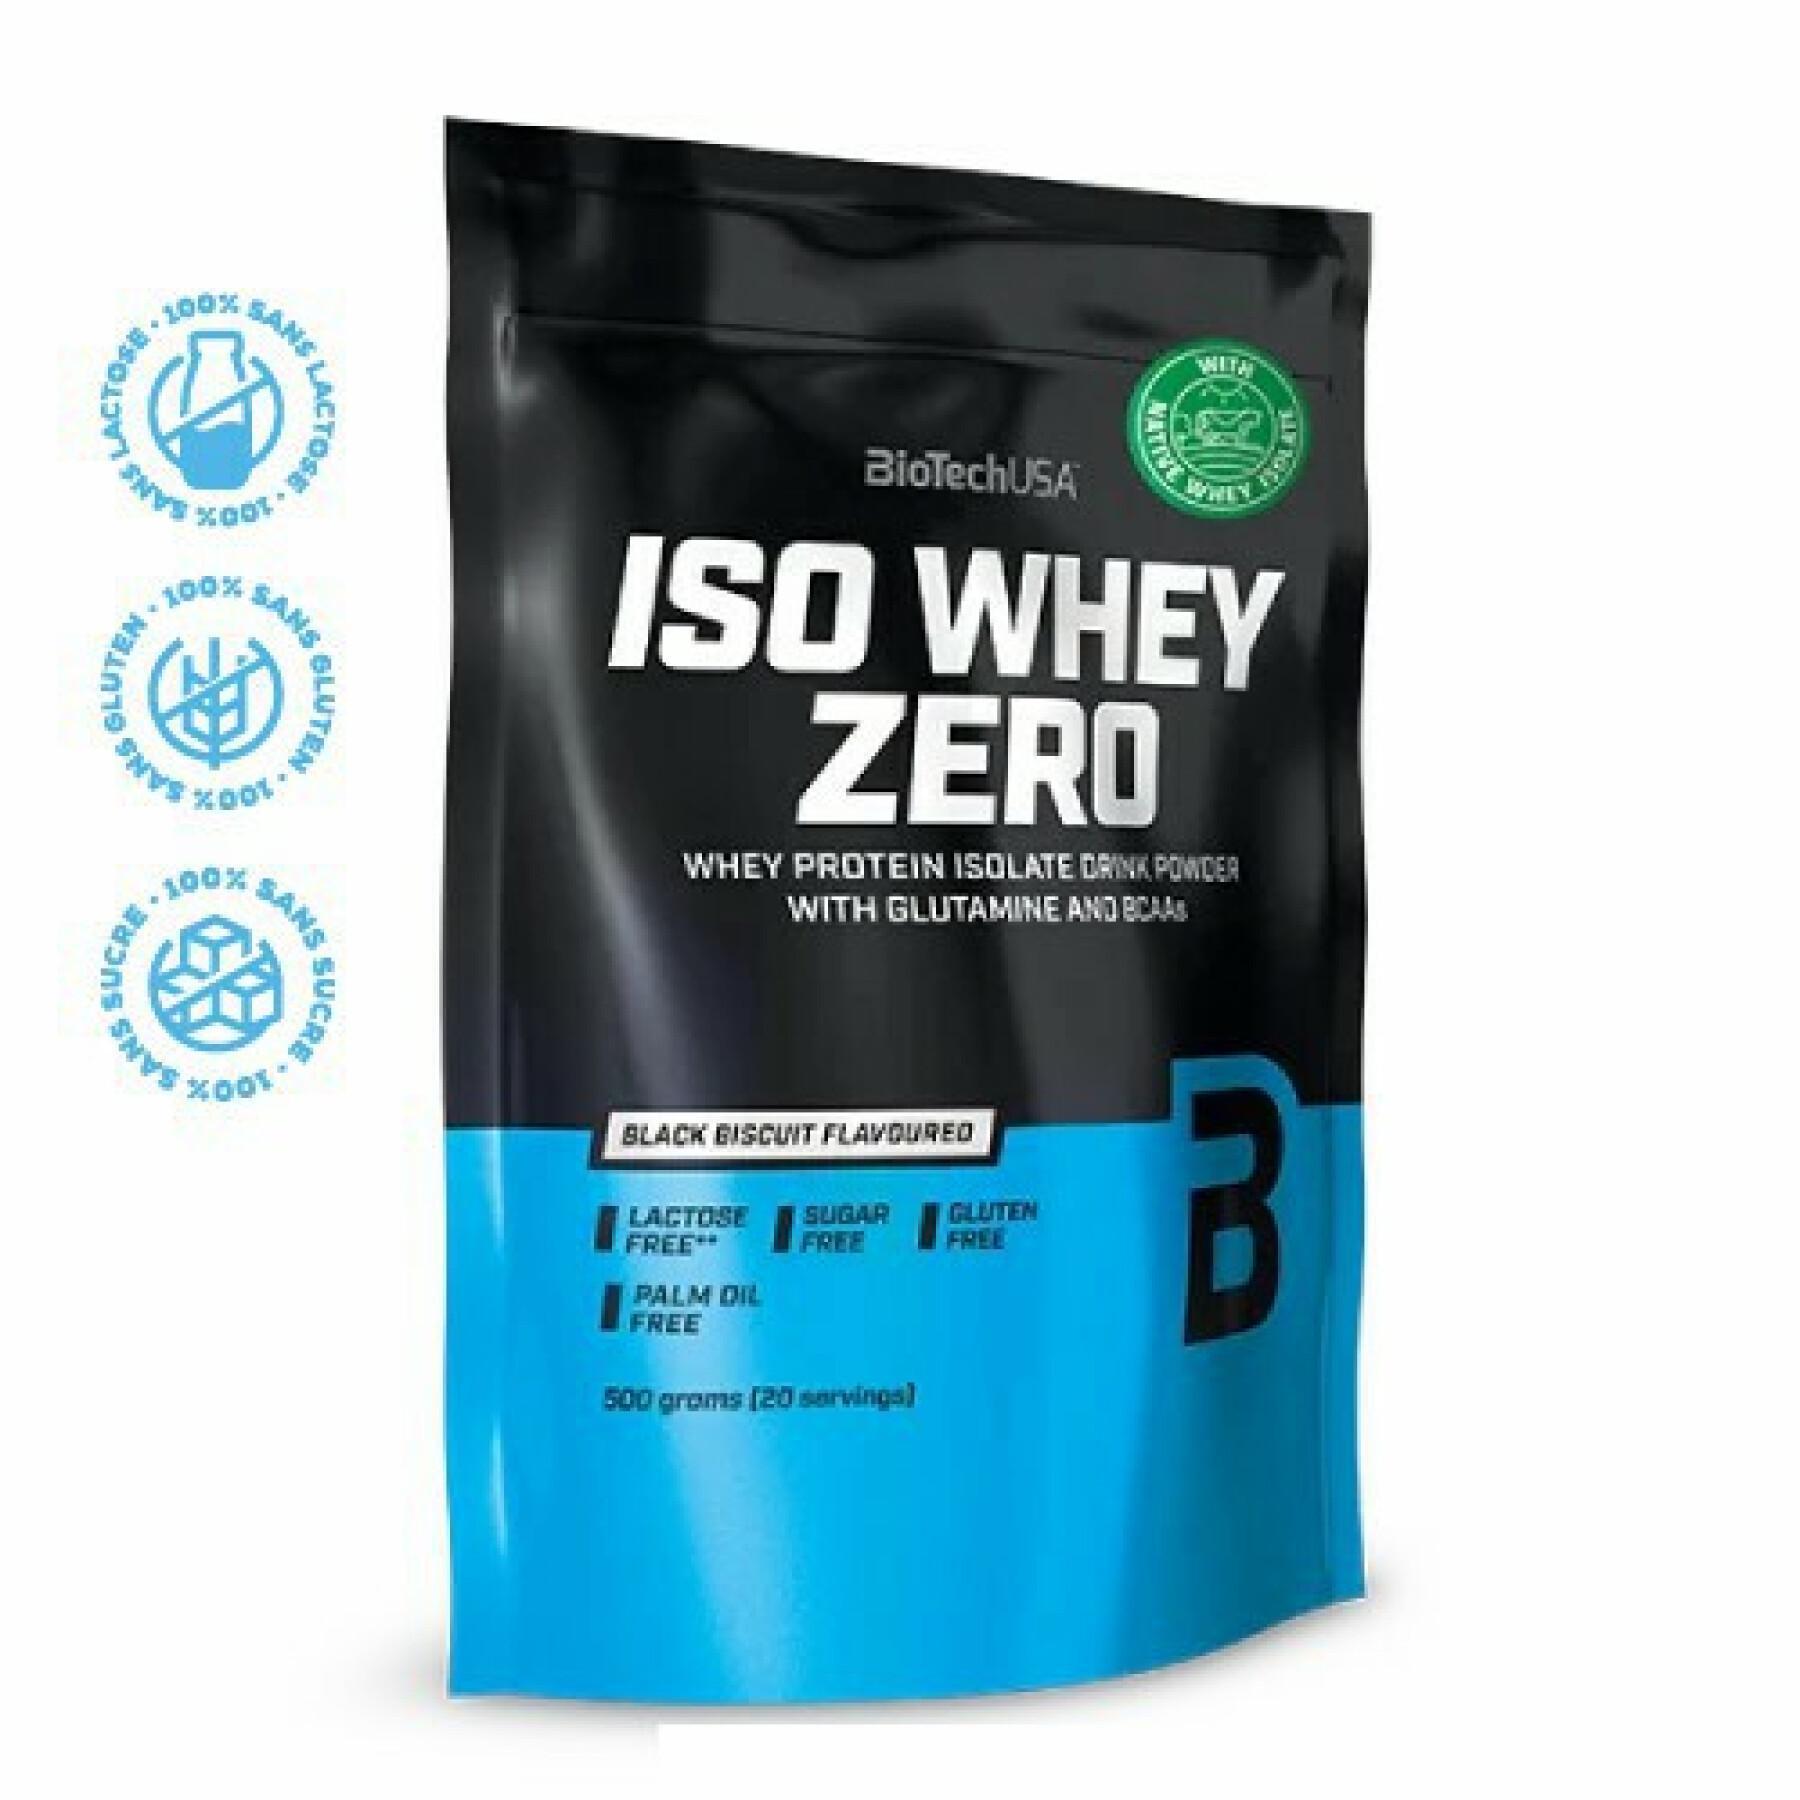 Pak van 10 zakjes proteïne Biotech USA iso whey zero lactose free - Black Biscuit - 500g